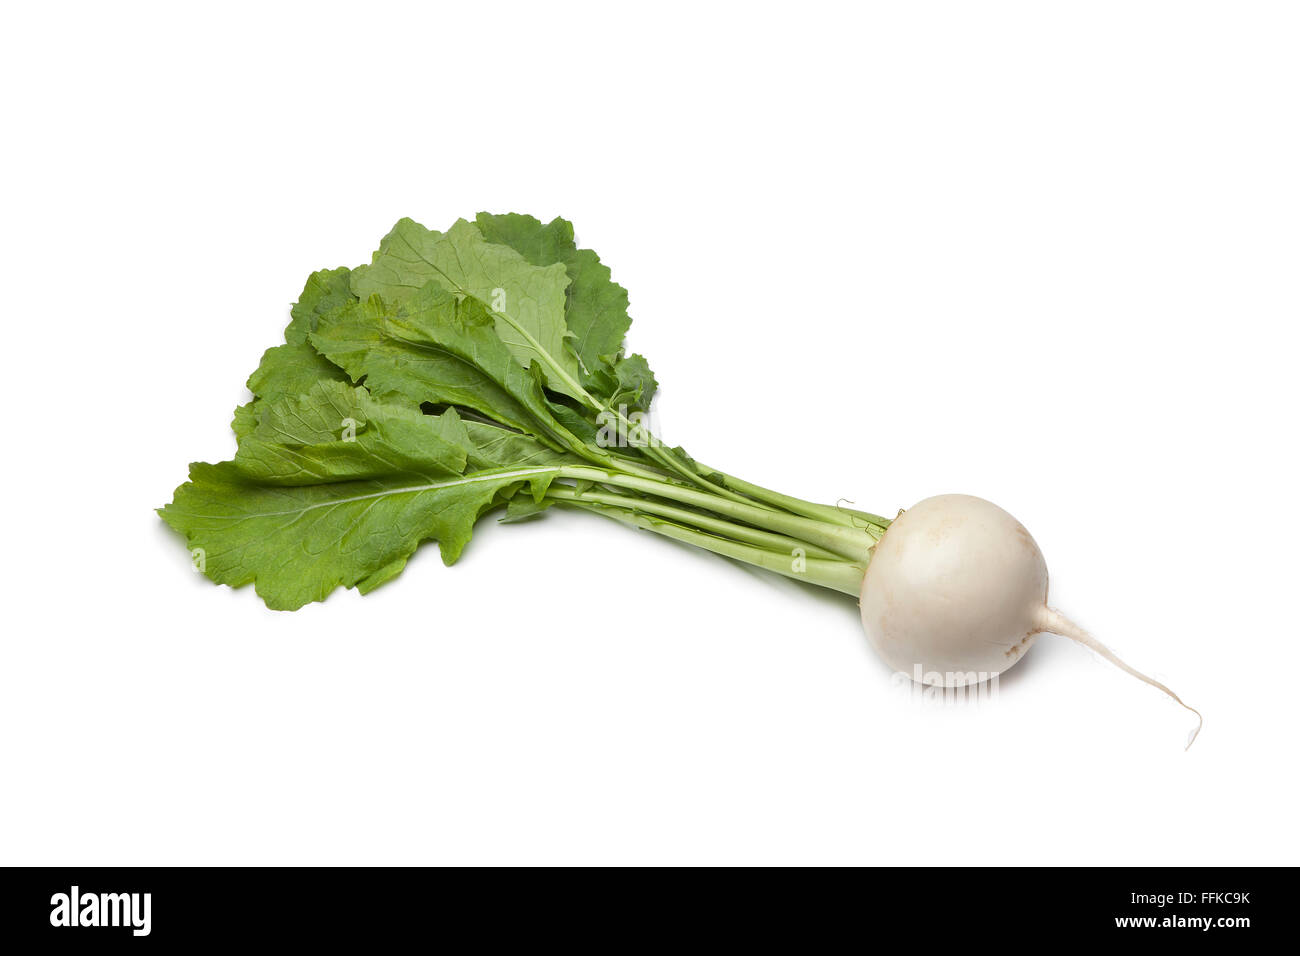 Whole single fresh white round Daikon radish on white background Stock Photo